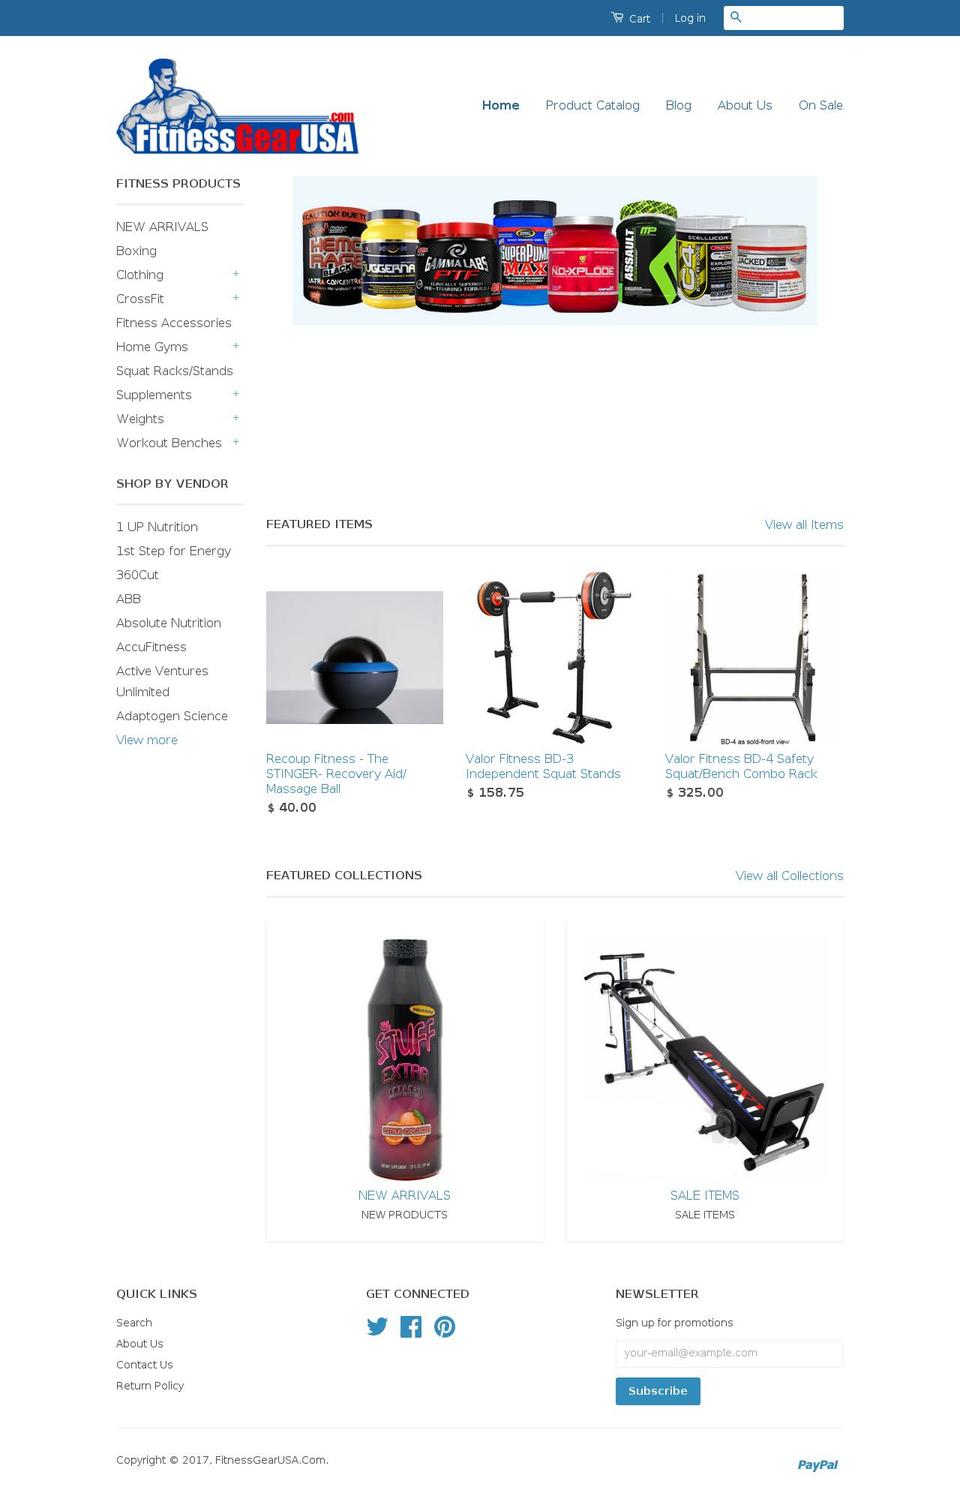 fitnessgearusa.com shopify website screenshot